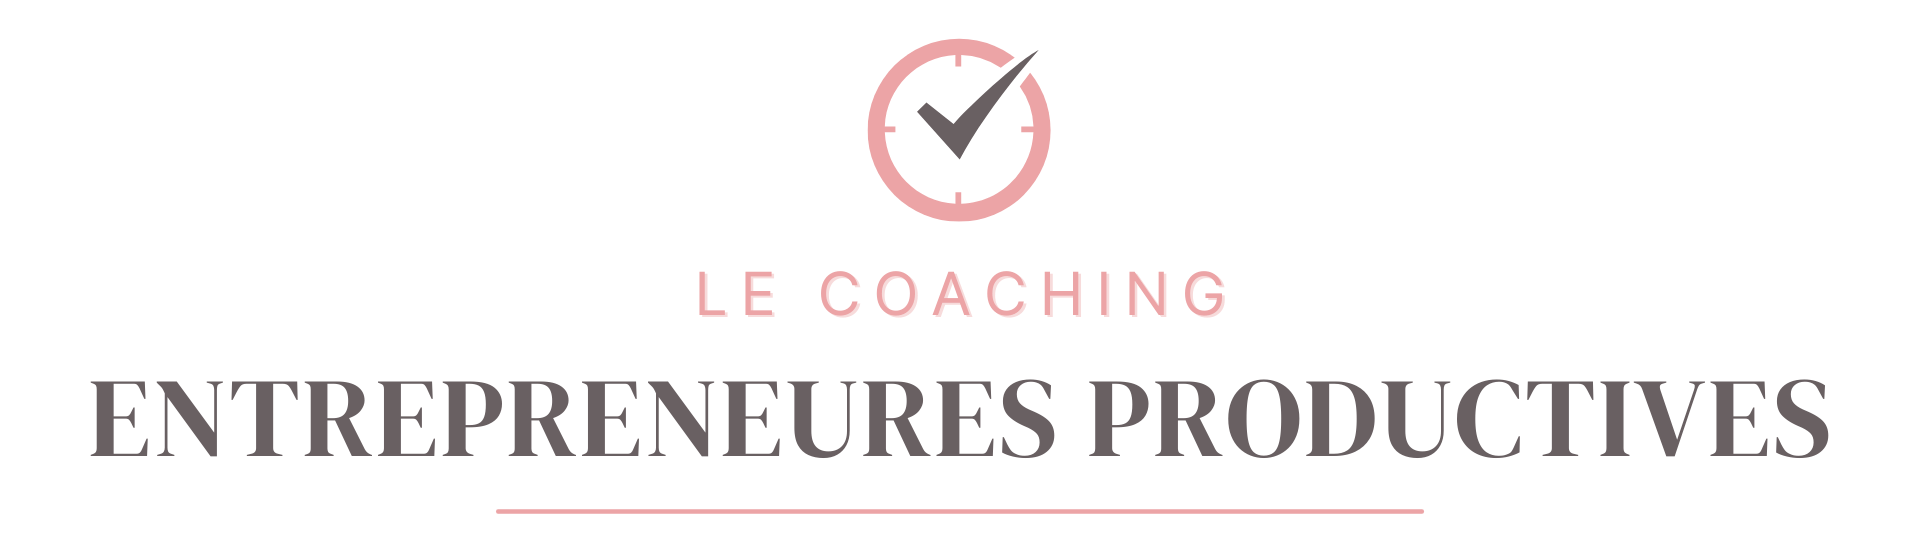 Coaching Entrepreneures Productives - Logo et texte